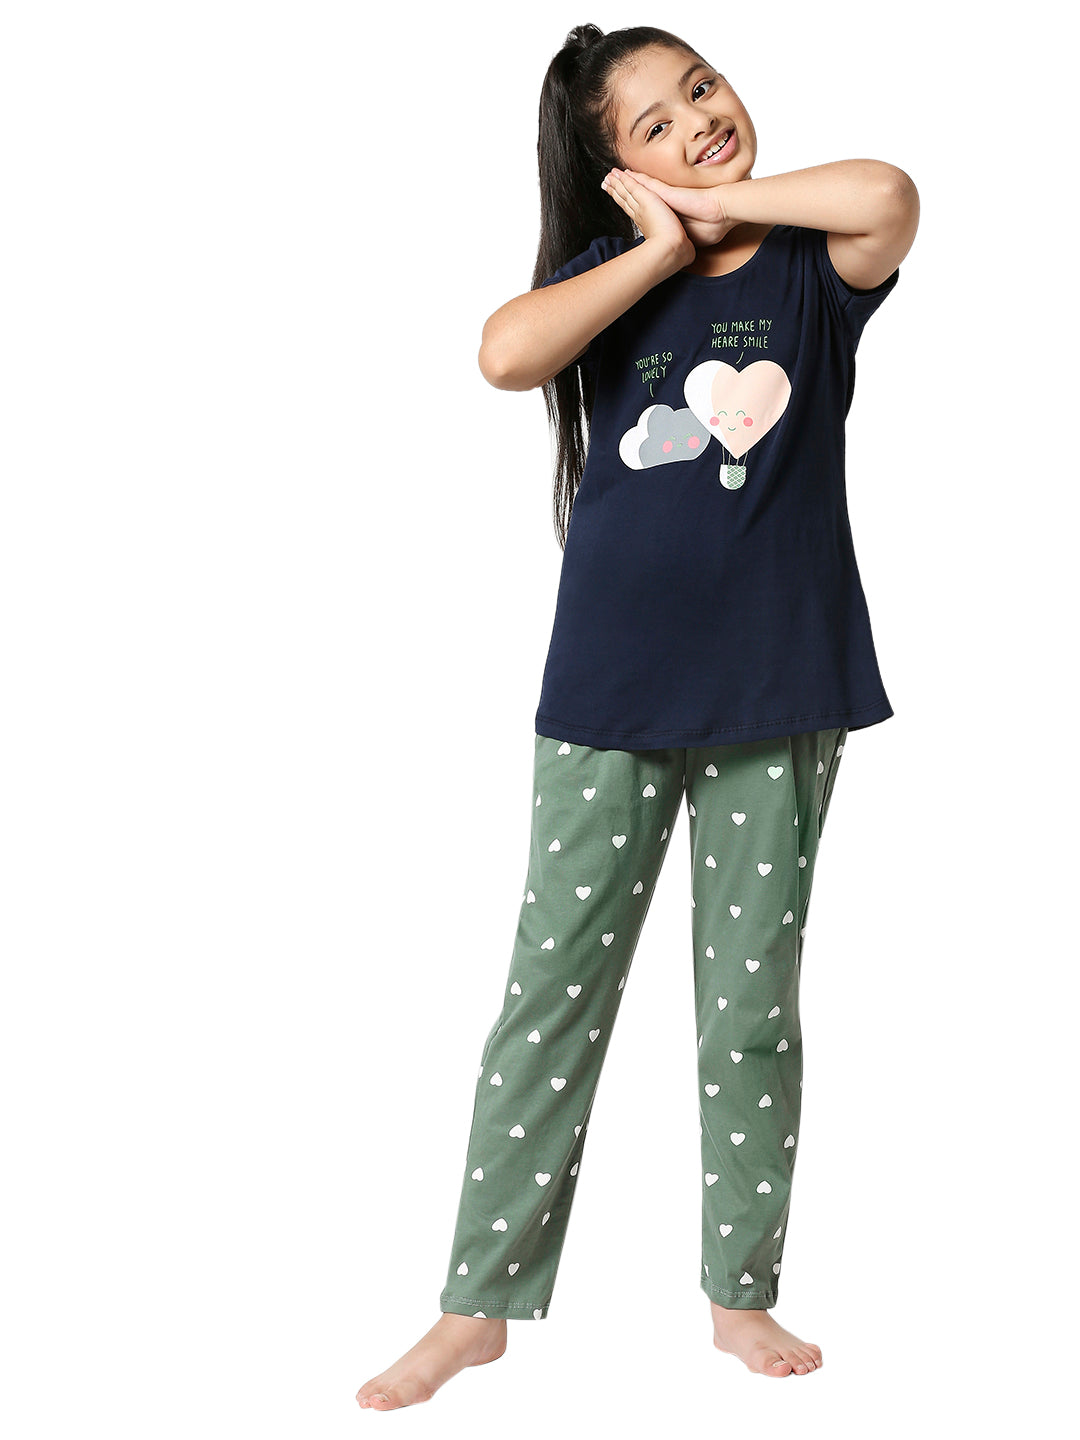 ZEYO Girl's Cotton Heart Printed Navy Blue Night Suit Set of Top & Pyjama